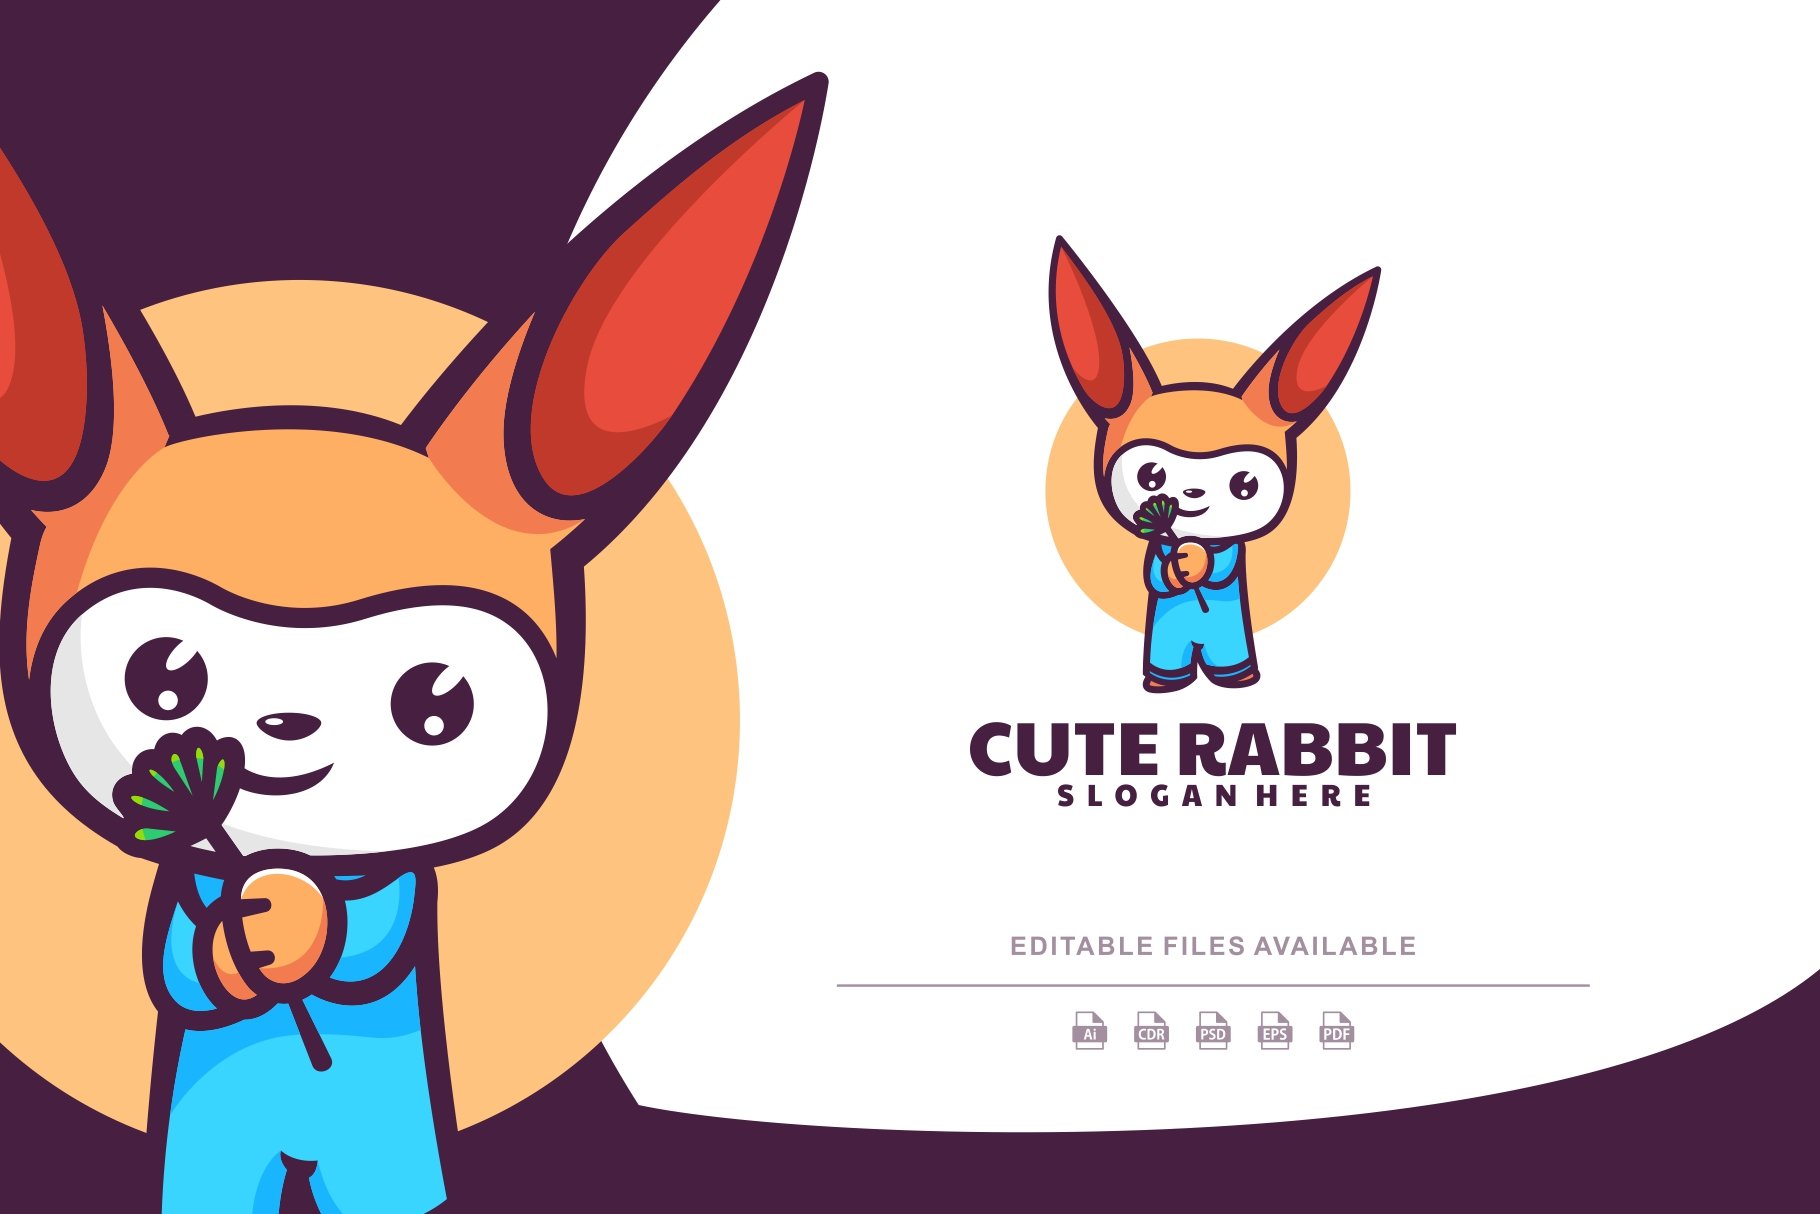 Rabbit Mascot Cartoon Logo cover image.